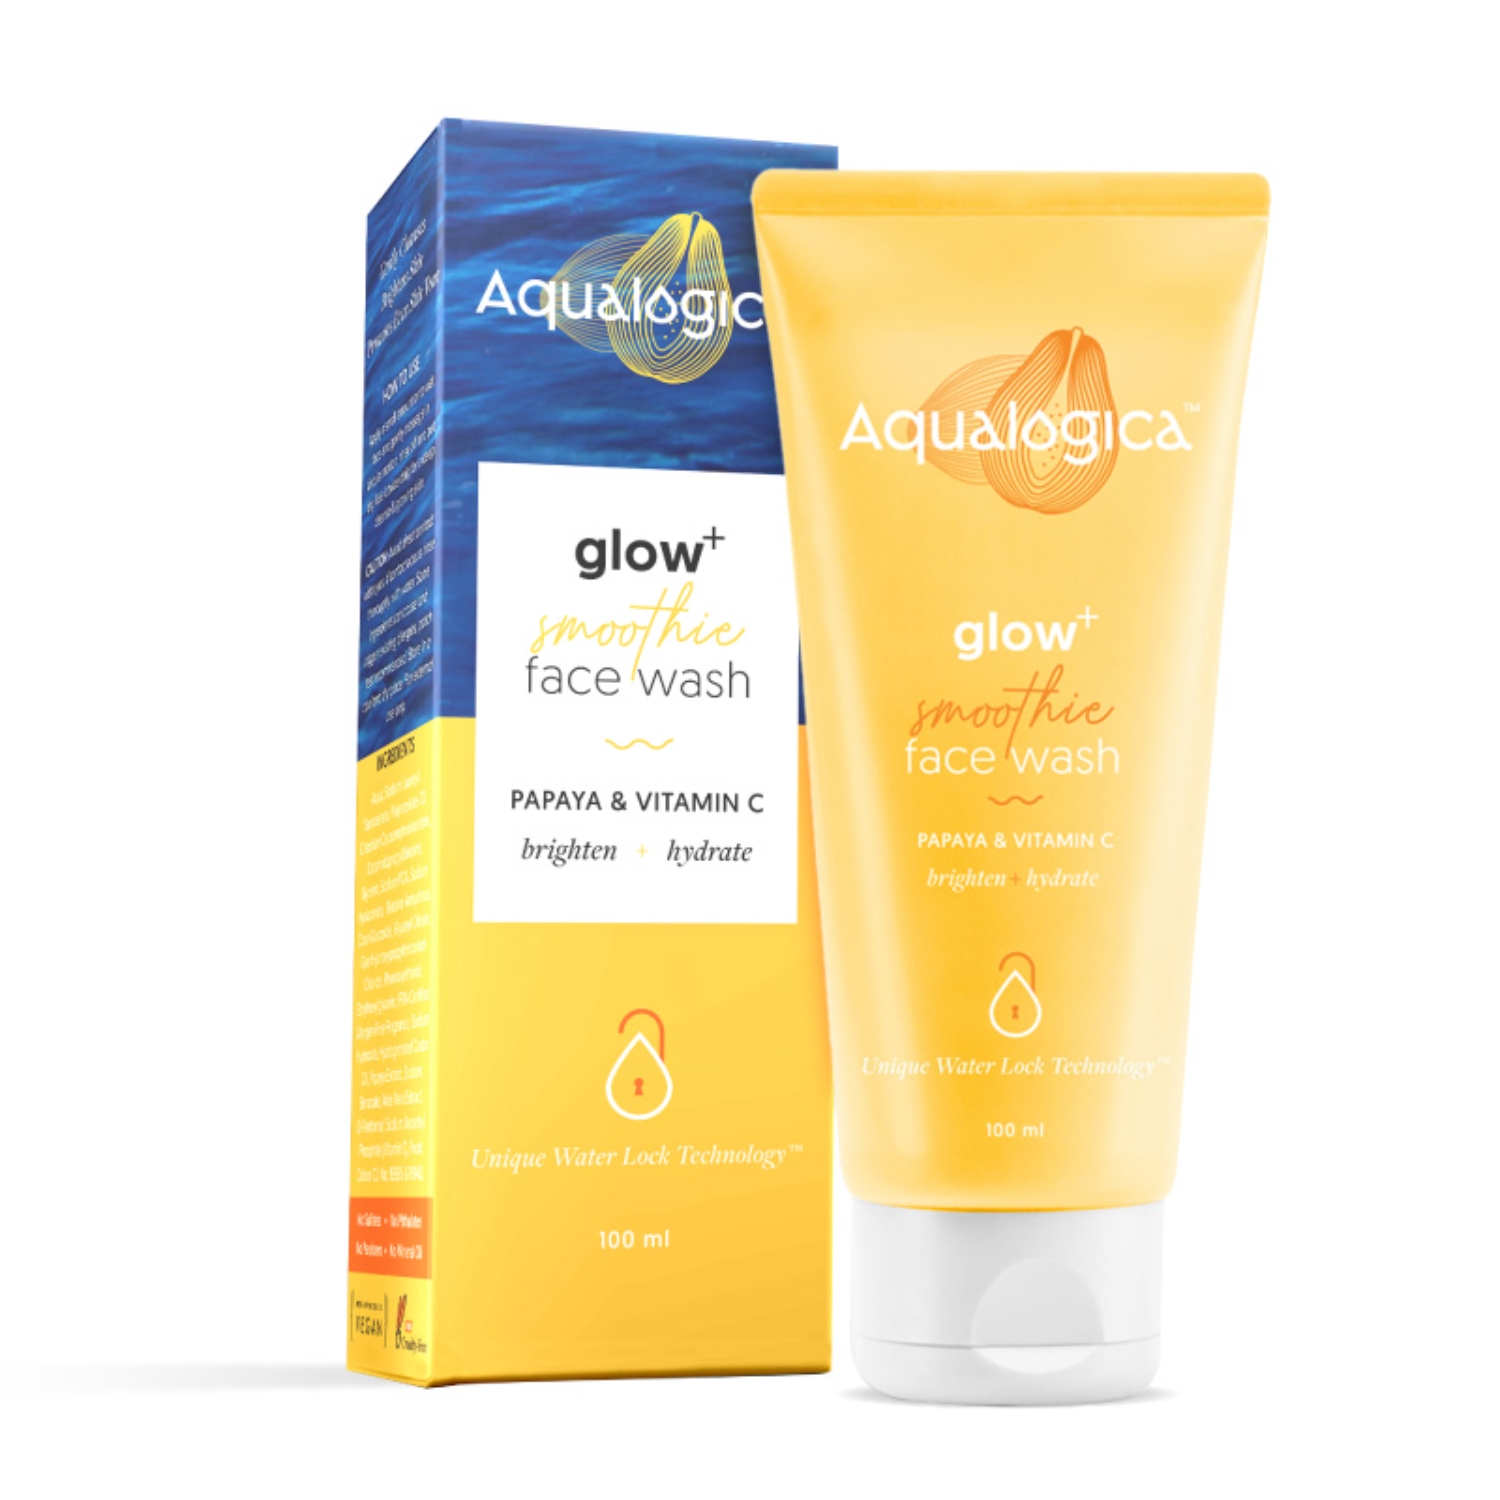 Aqualogica | Aqualogica Glow+ Smoothie Face Wash (100ml)